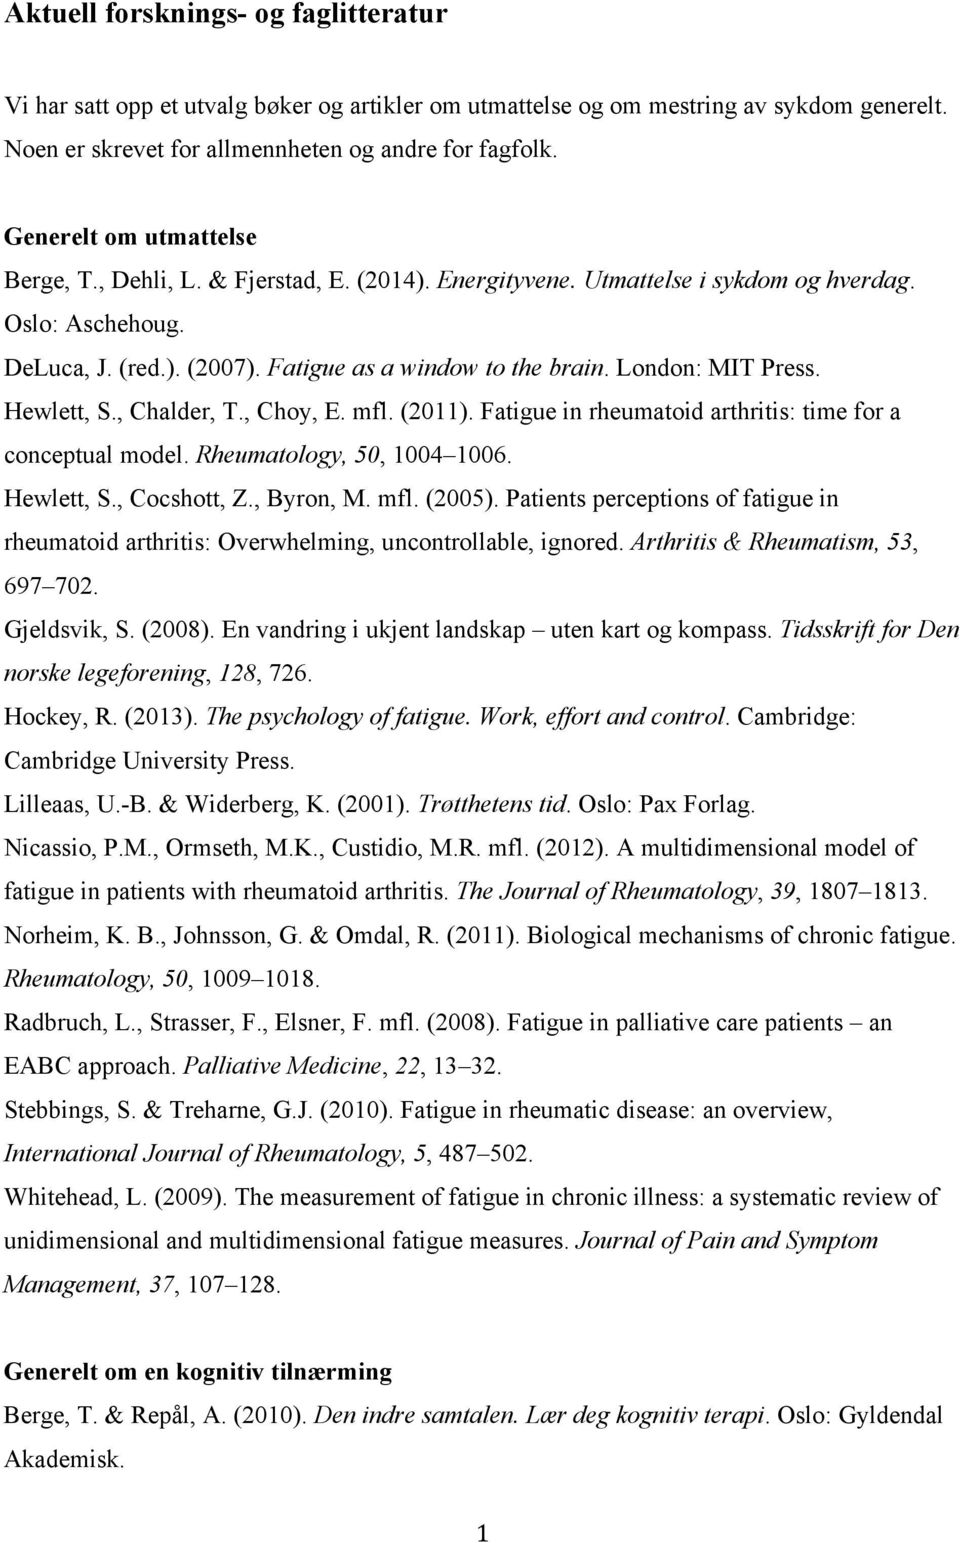 London: MIT Press. Hewlett, S., Chalder, T., Choy, E. mfl. (2011). Fatigue in rheumatoid arthritis: time for a conceptual model. Rheumatology, 50, 1004 1006. Hewlett, S., Cocshott, Z., Byron, M. mfl. (2005).